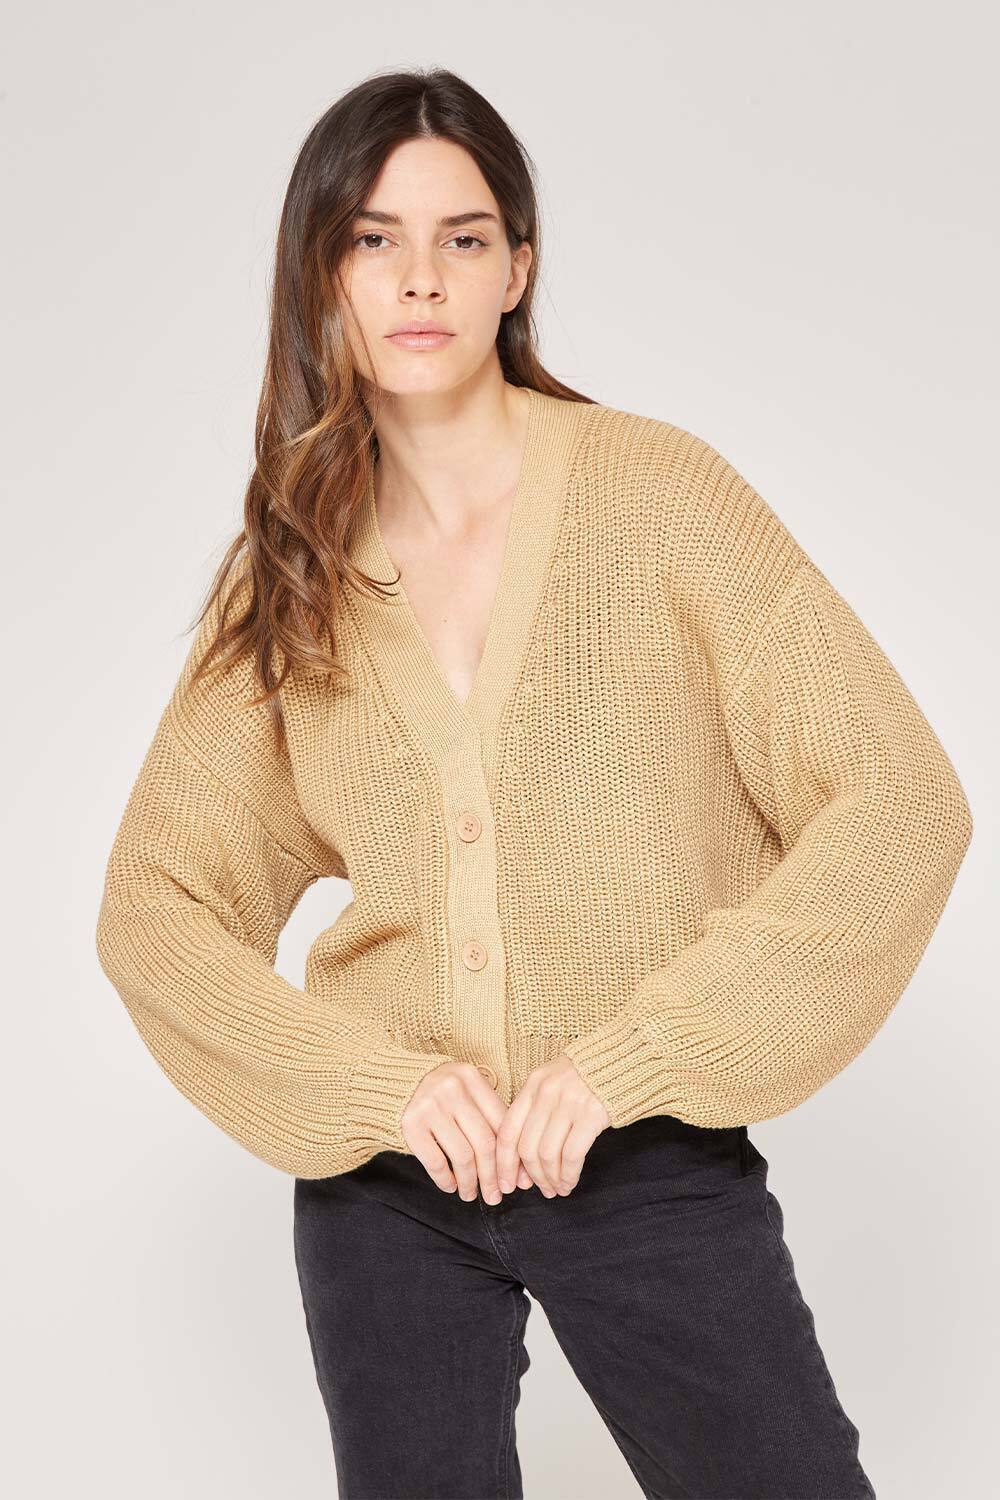 Sweater Cropped Orgánico Mujer Crudo